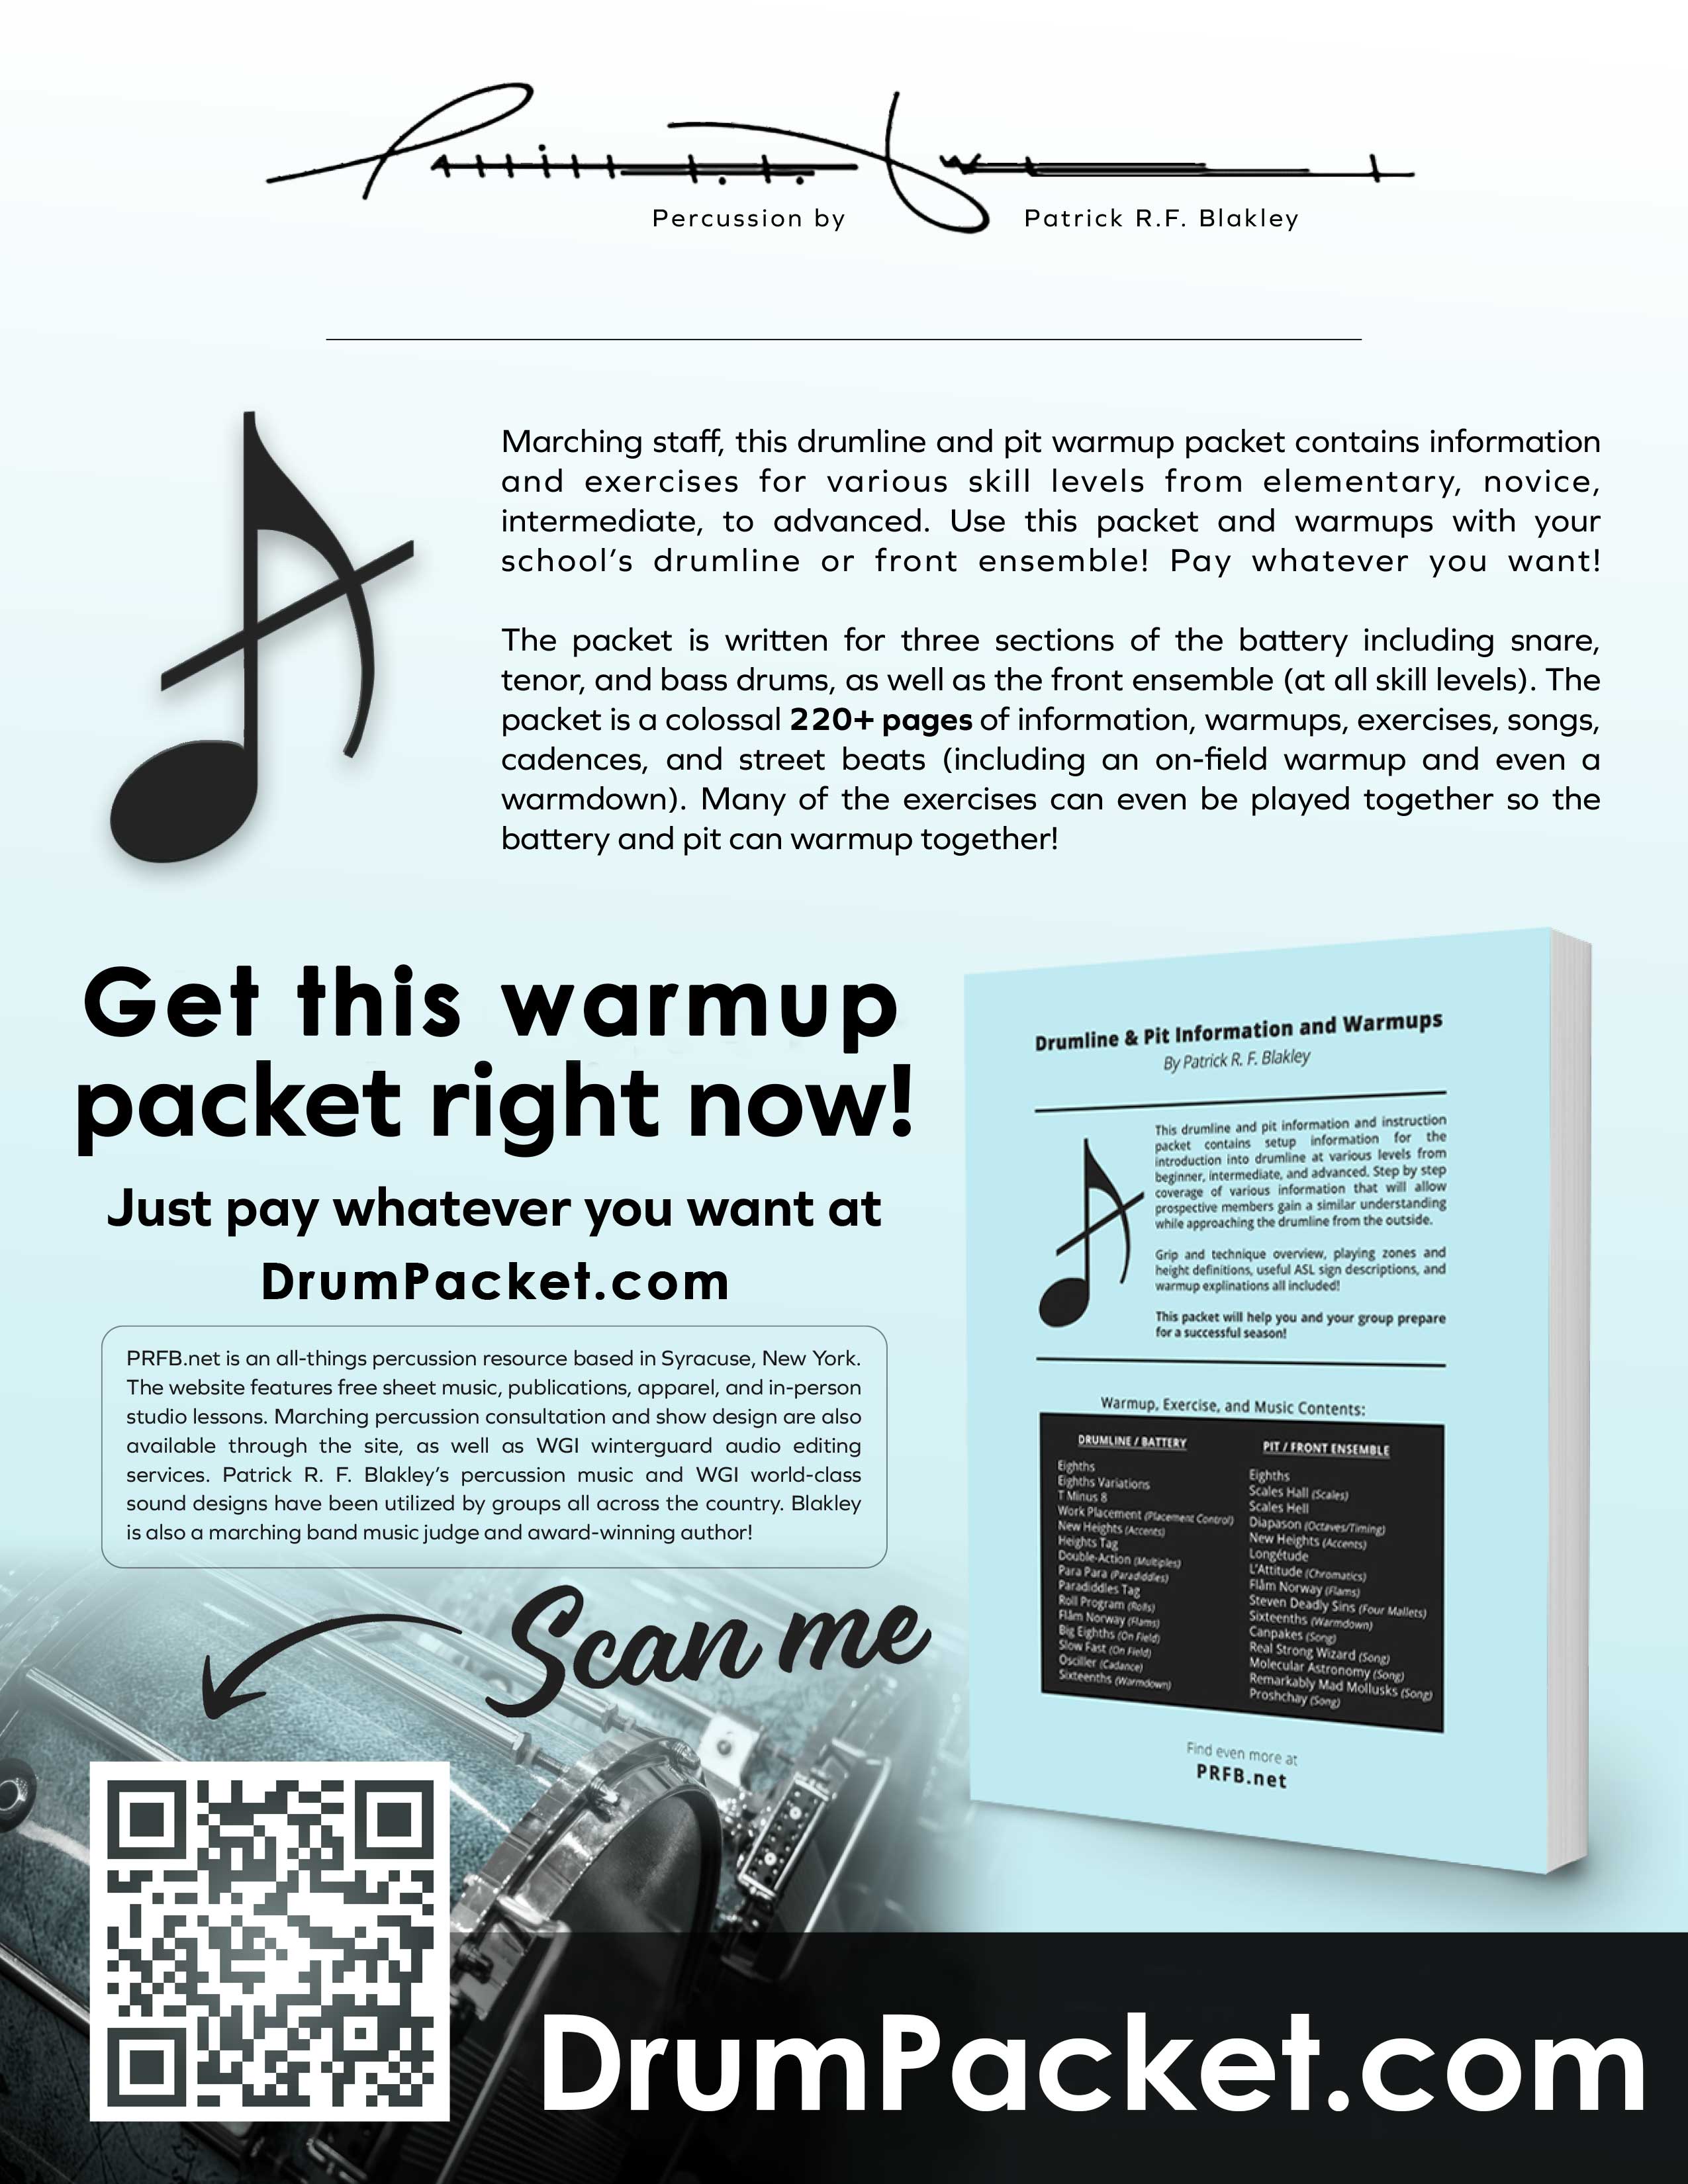 DrumPacket.com flyer for drumline music!